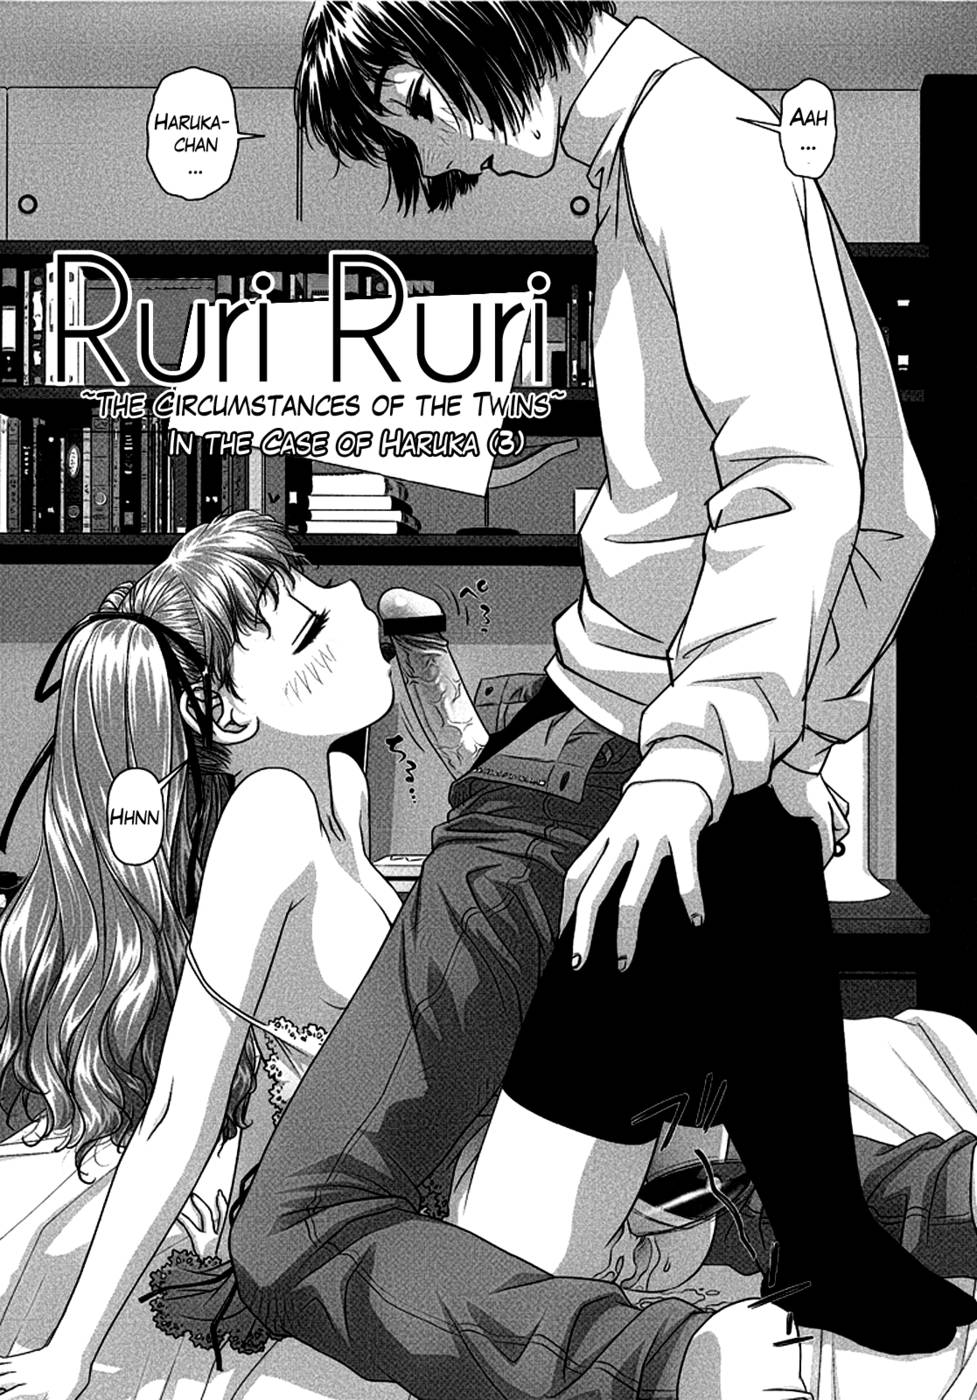 Hentai Manga Comic-Ruri Ruri-Chapter 6-The Circumstances Of The Twins- In The Case Of Haruka 3-1